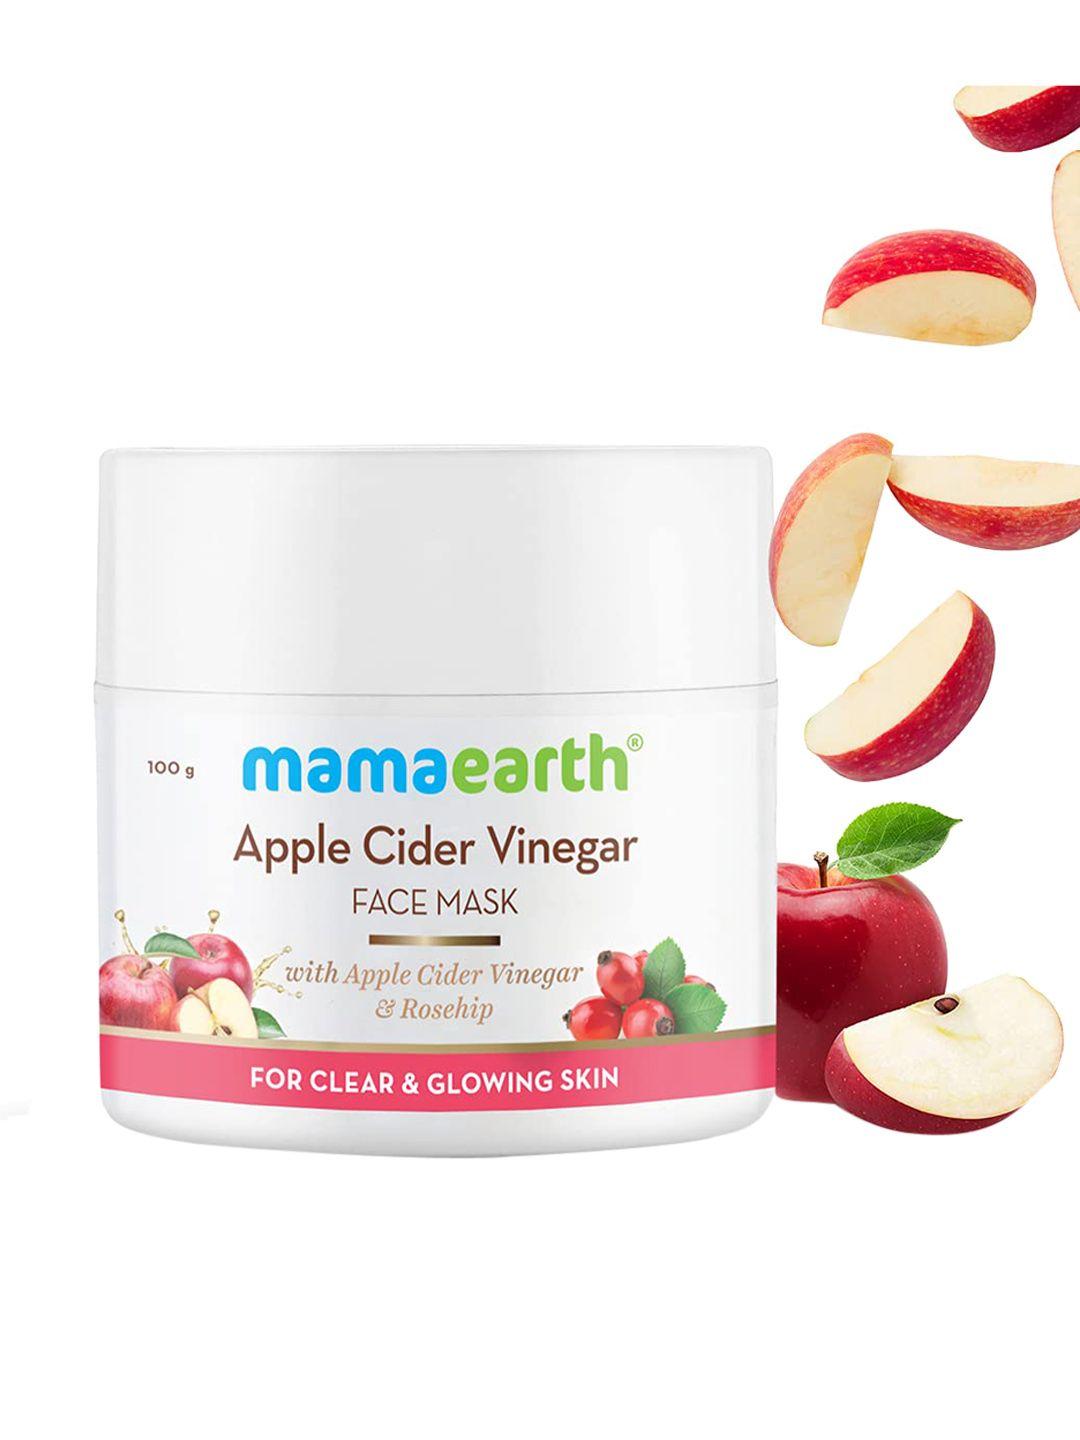 mamaearth red apple cider vinegar face mask 100 g